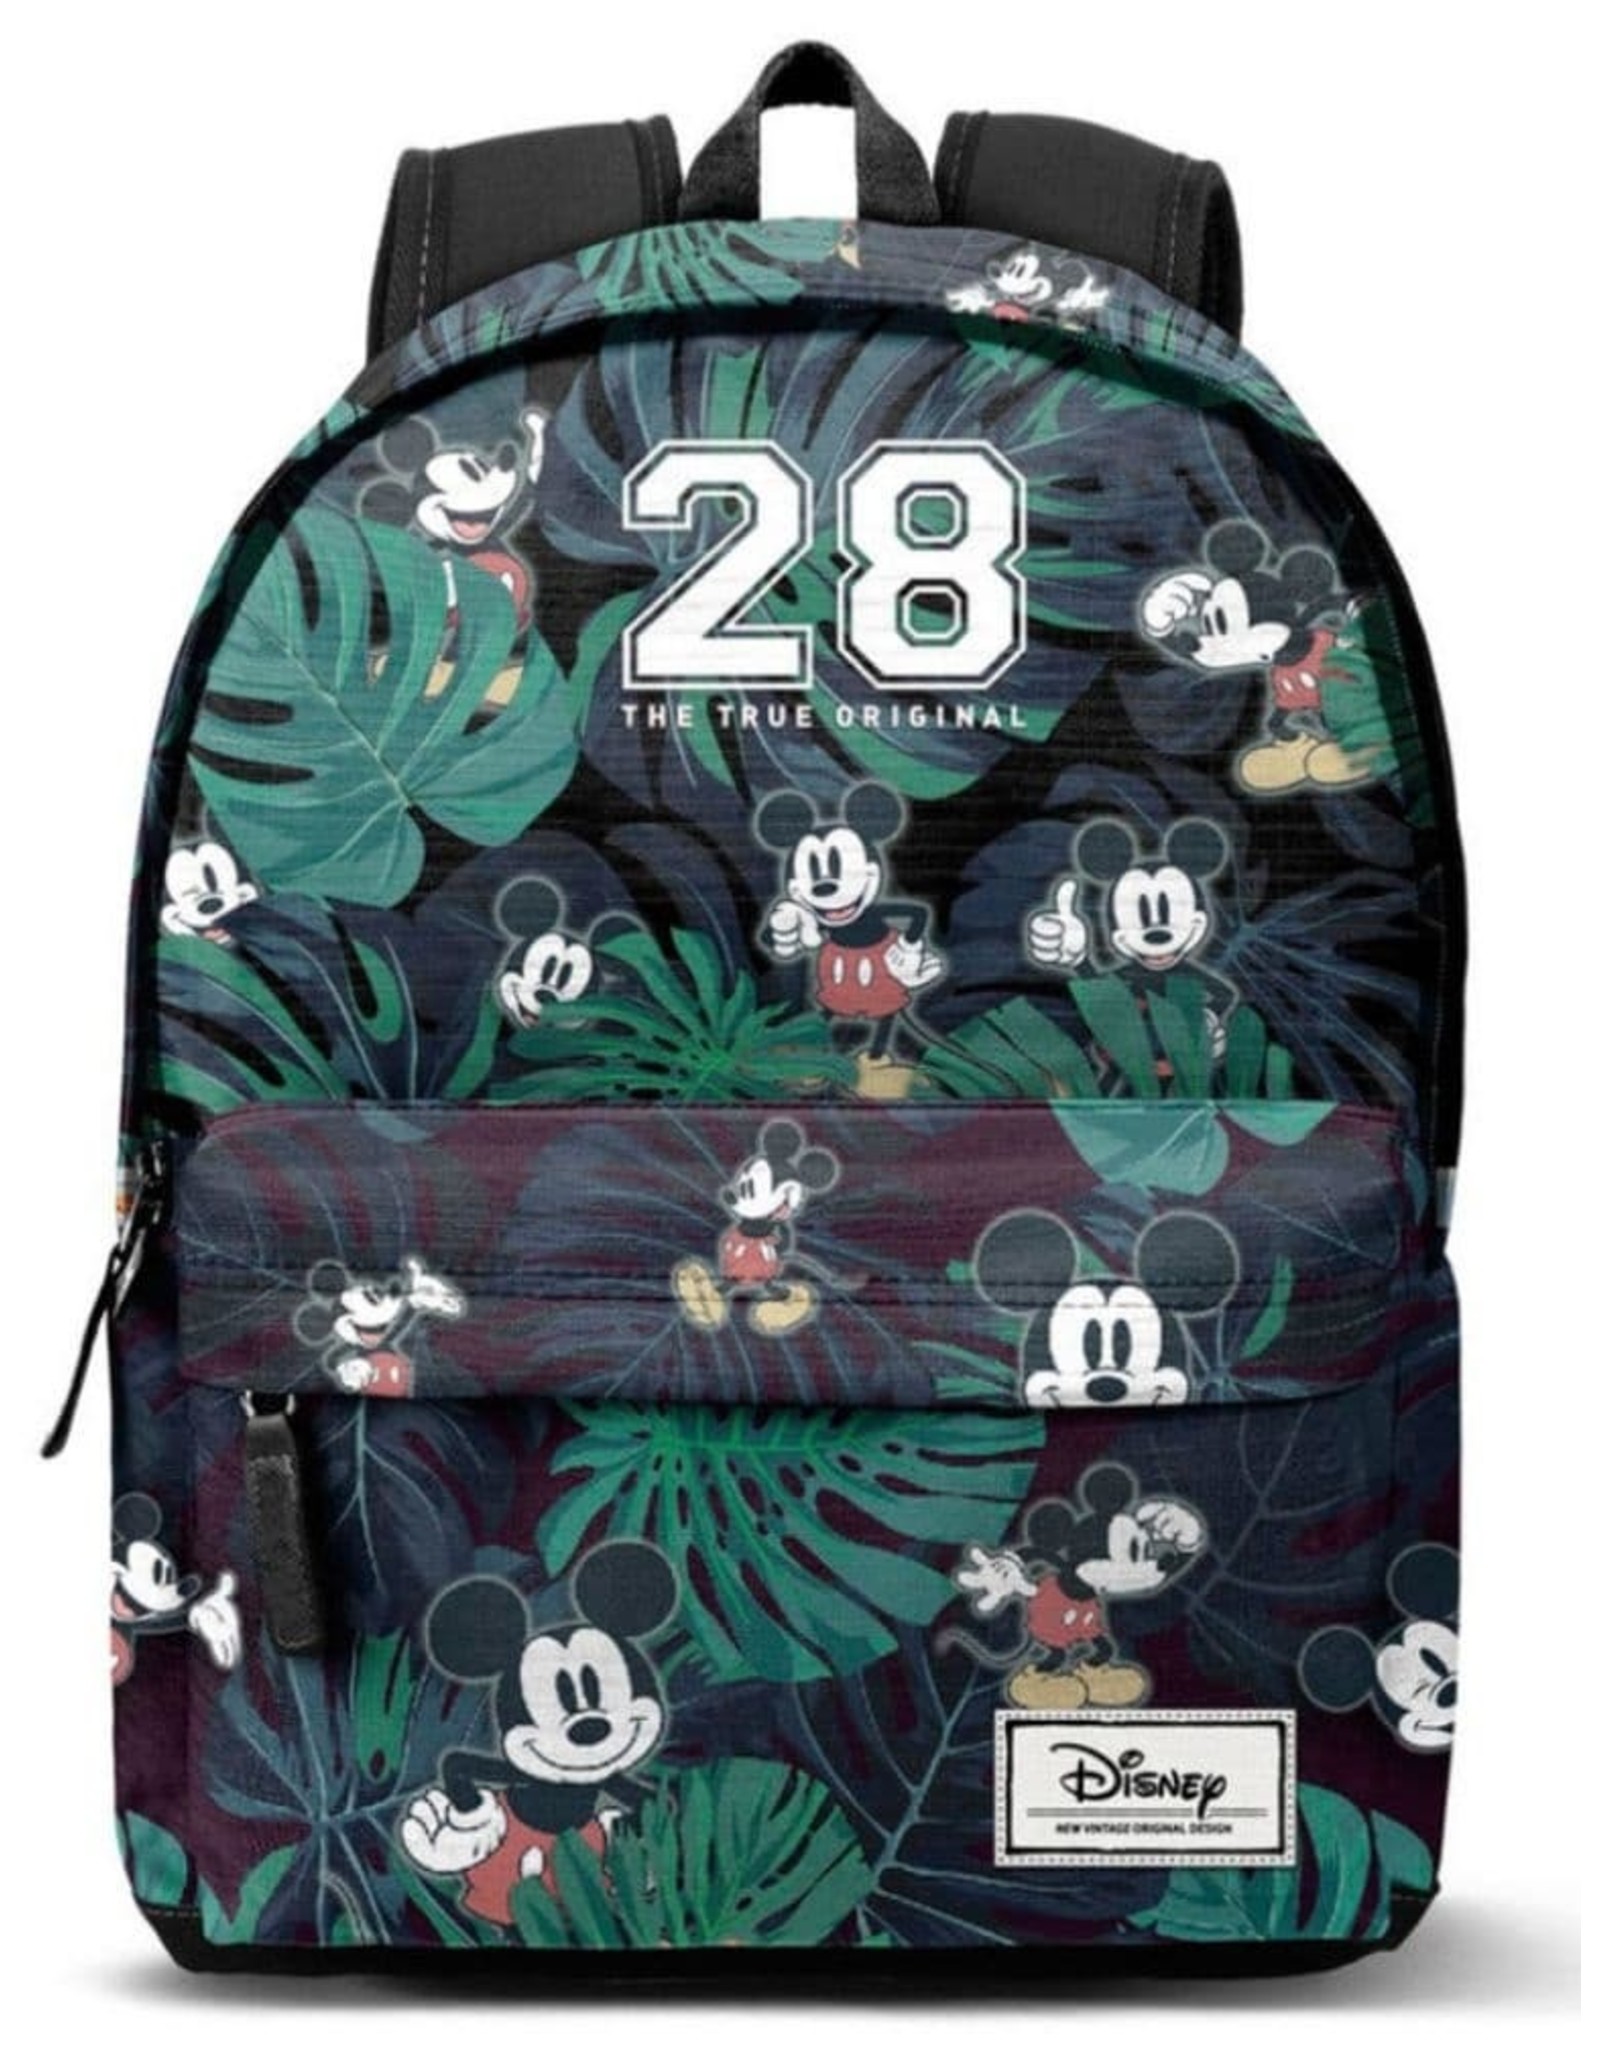 Disney Disney bags - Disney backpack Mickey 28 Classic